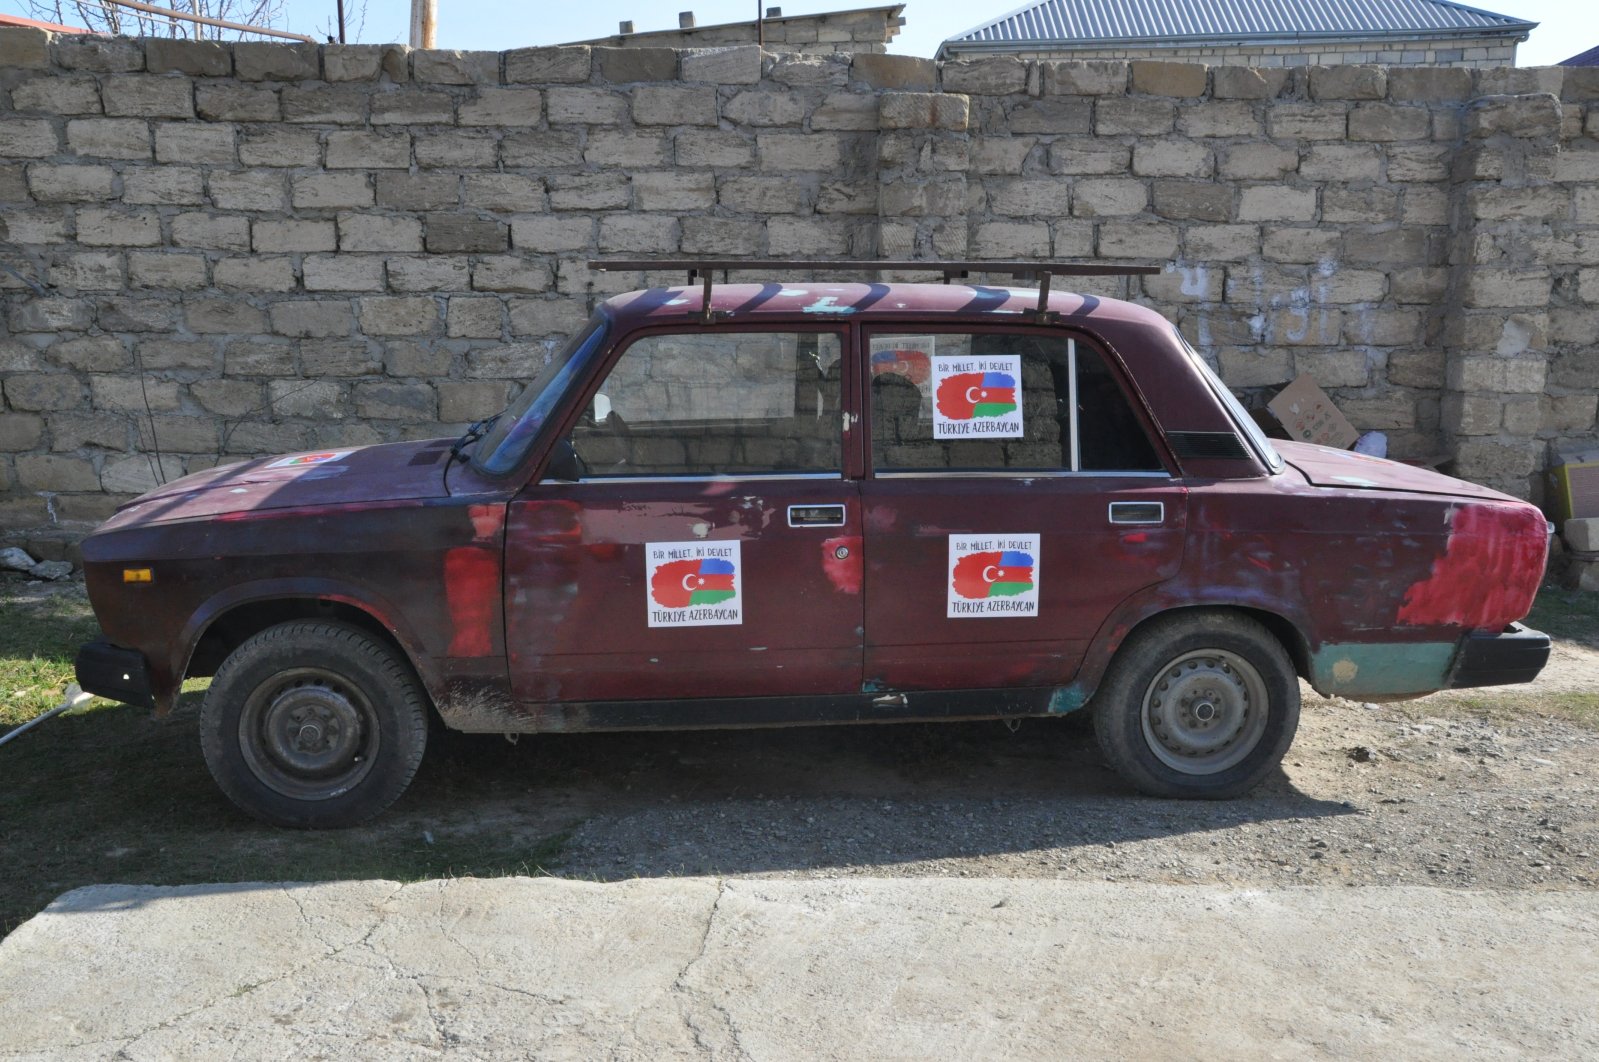 Server Beşirli&#039;s car in which he delivered aid to help earthquake victims in Türkiye, in Baku, Azerbaijan, Feb. 11, 2023.